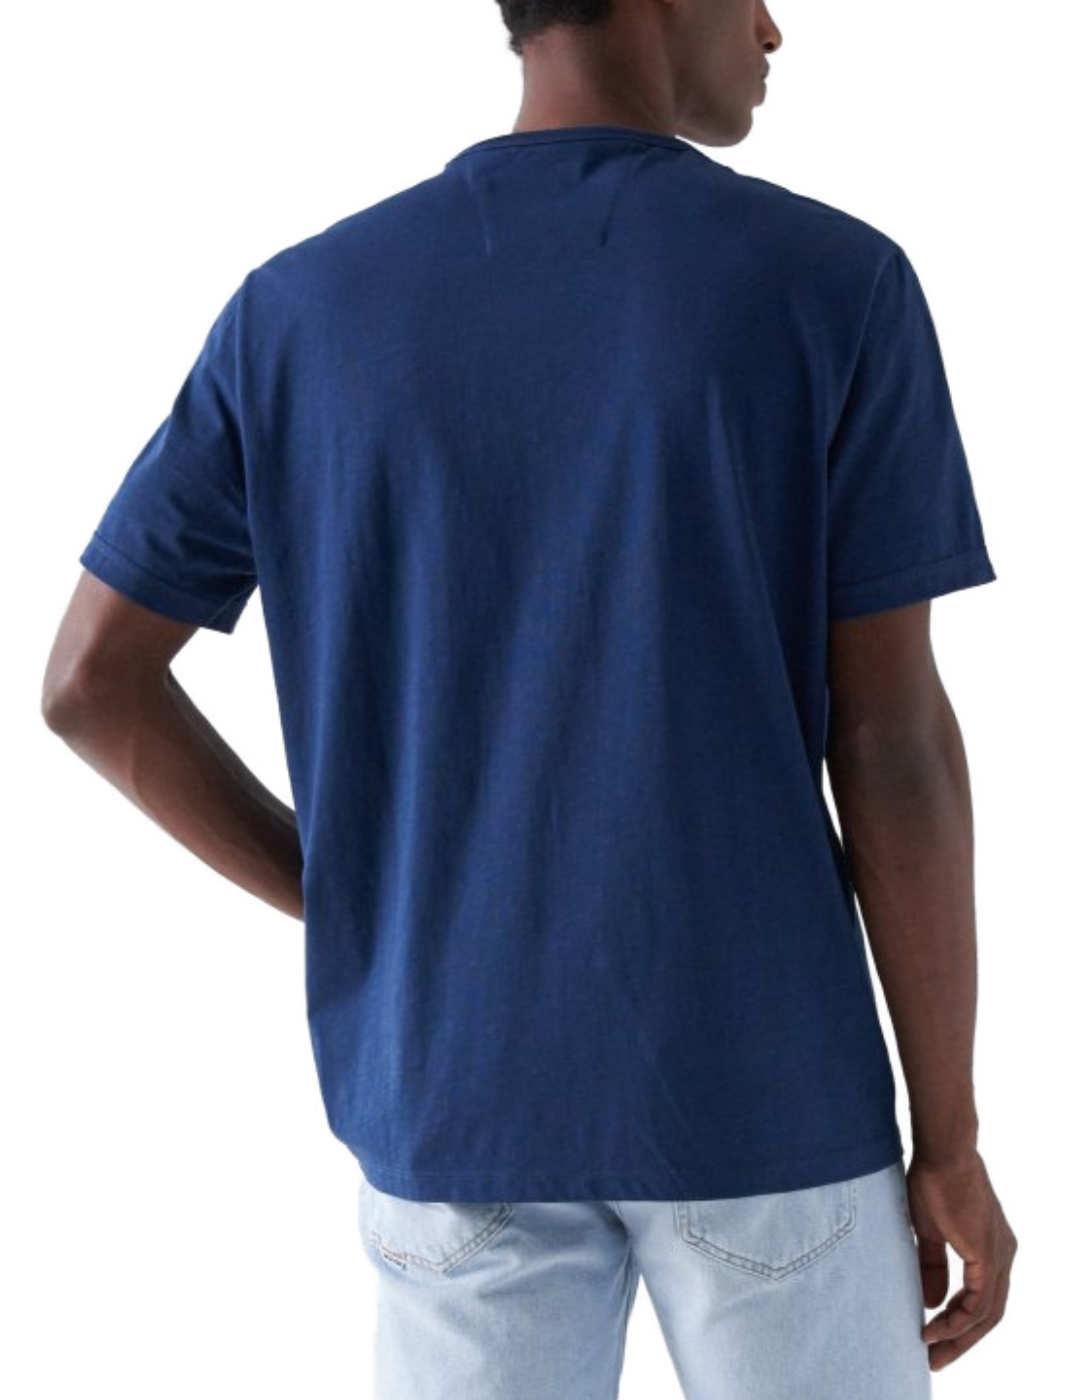 Camiseta Salsa azul logo blanco manga corta para hombre